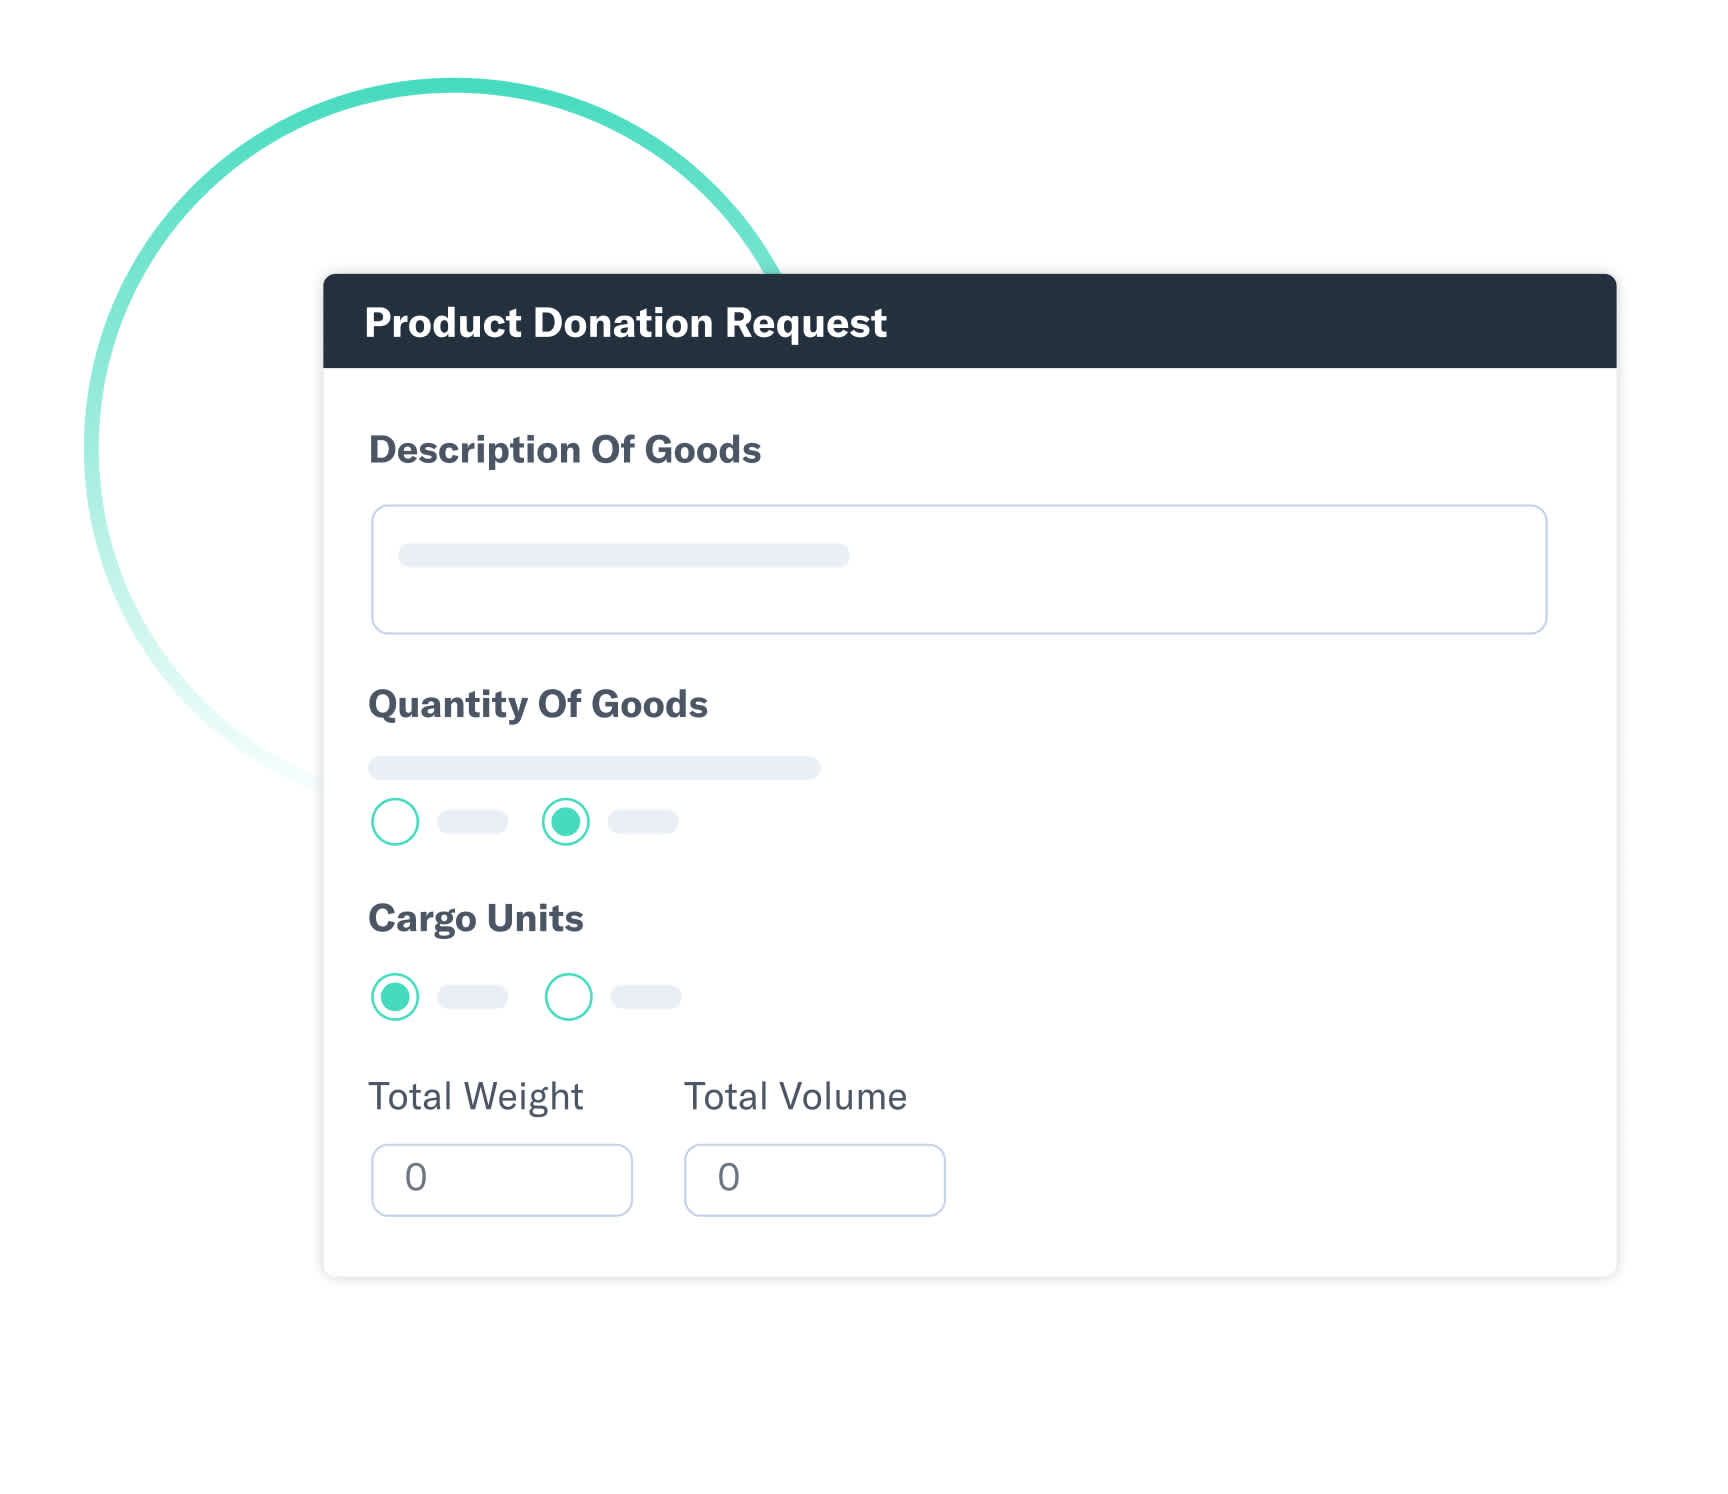 Product donation request module in the Flexport Platform